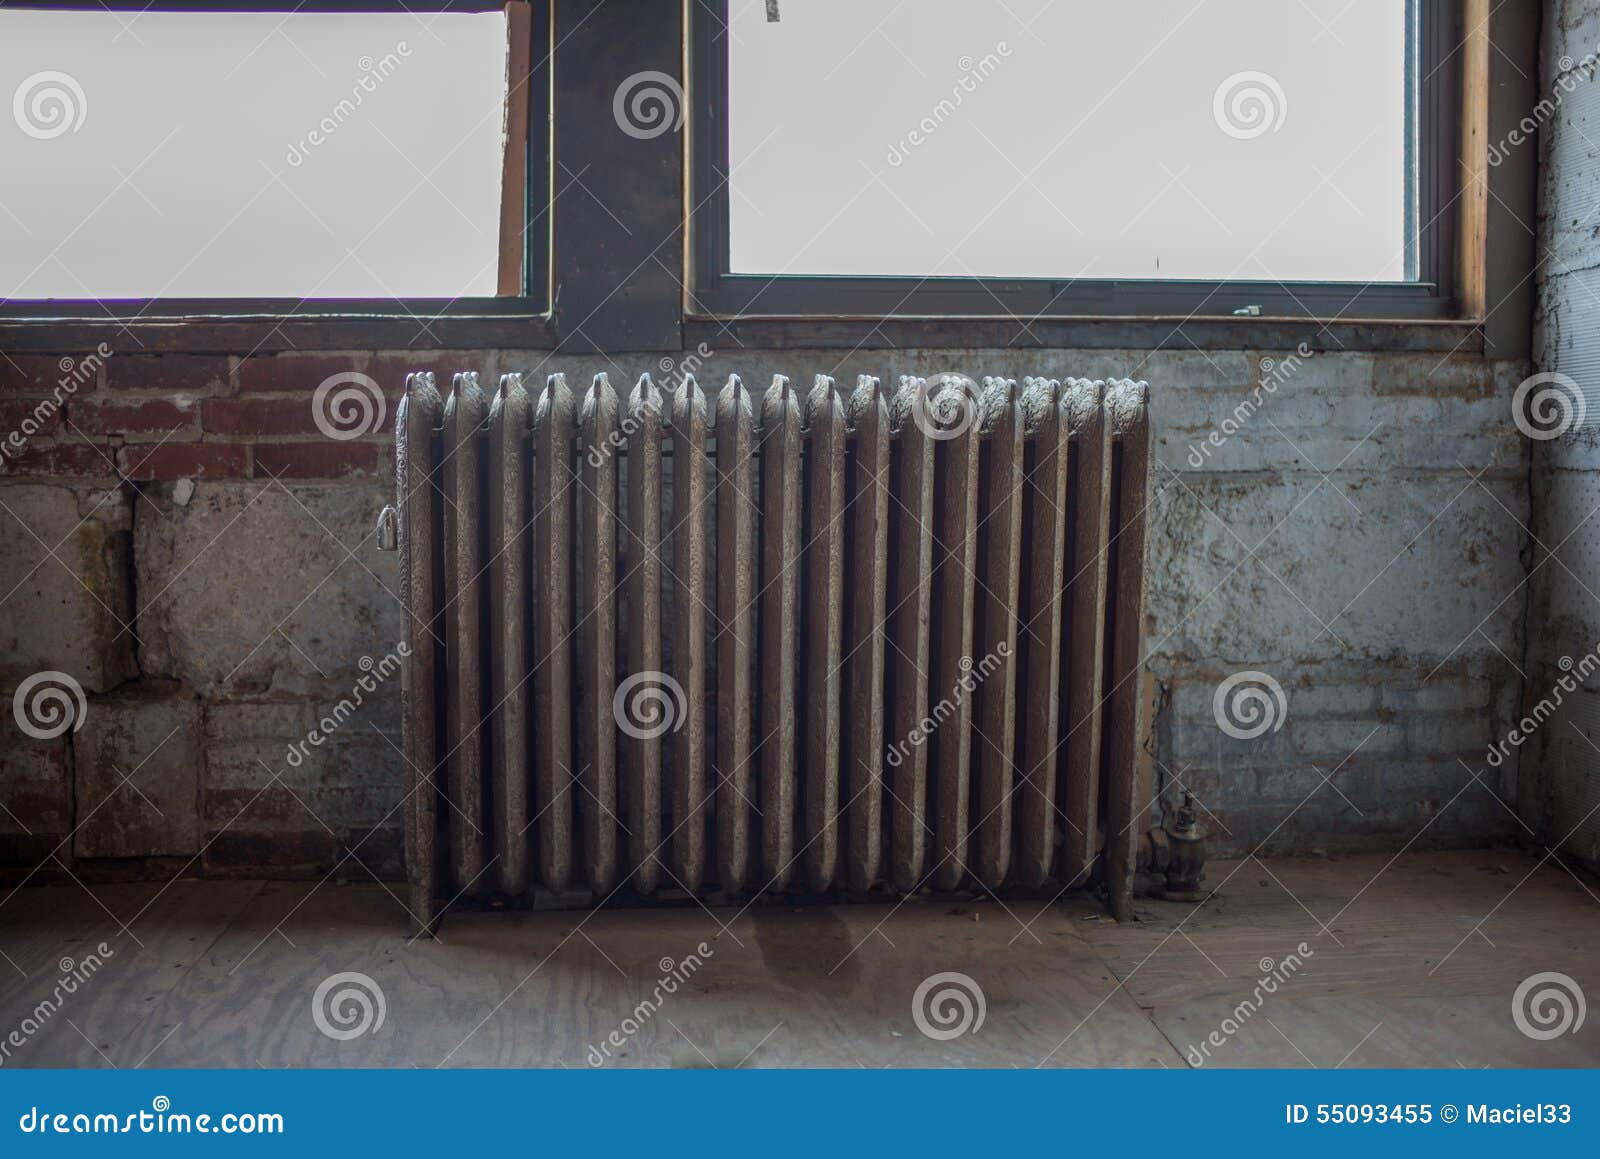 Radiators for steam heat фото 90